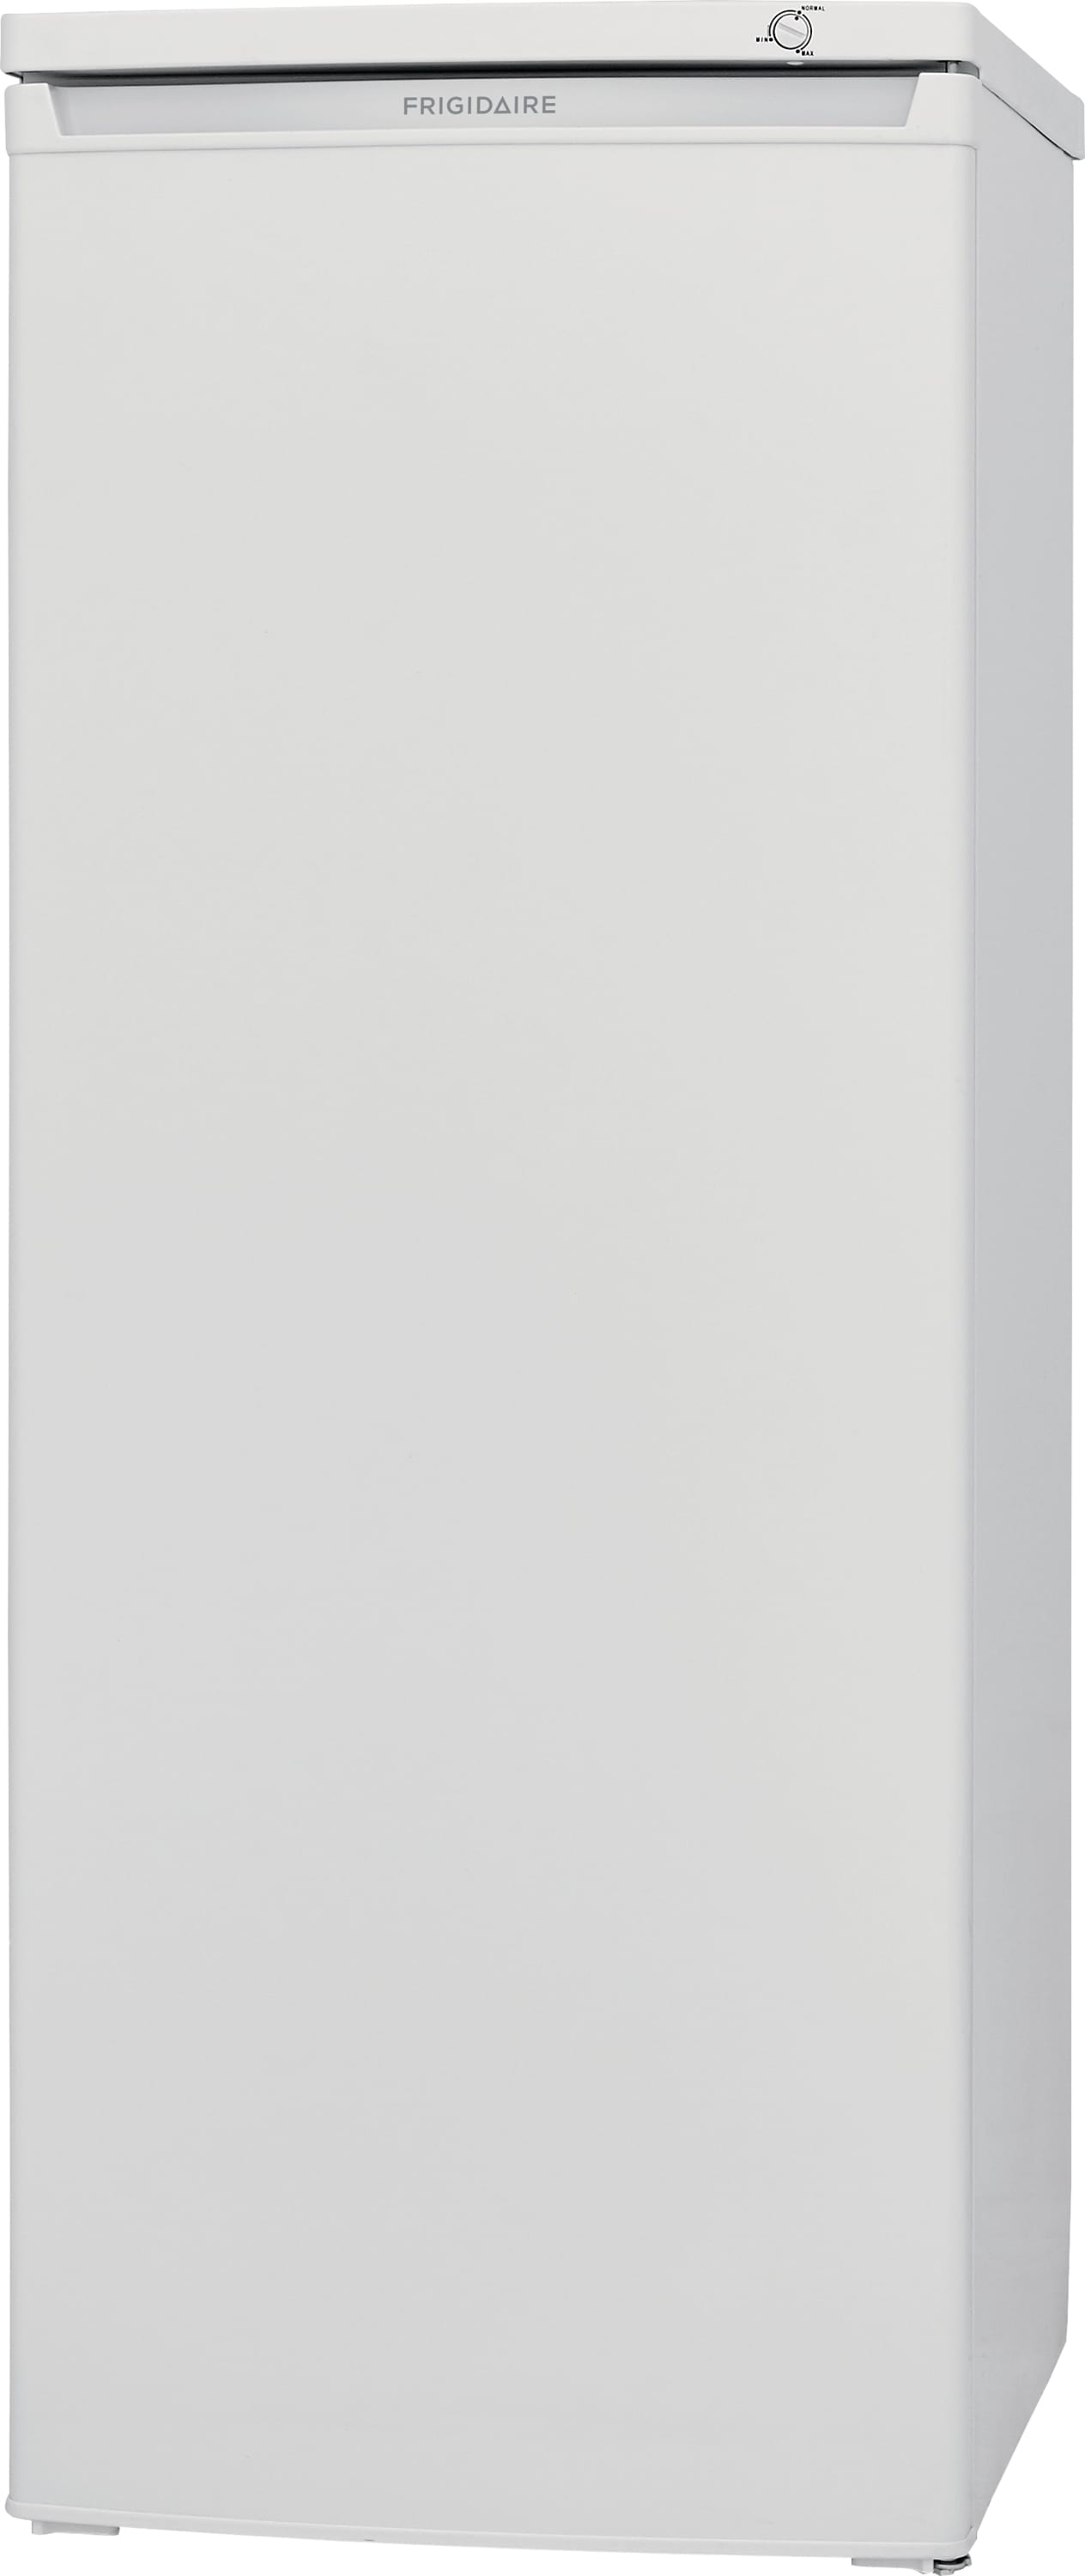 Frigidaire 5.8-cu ft Upright Freezer (White)